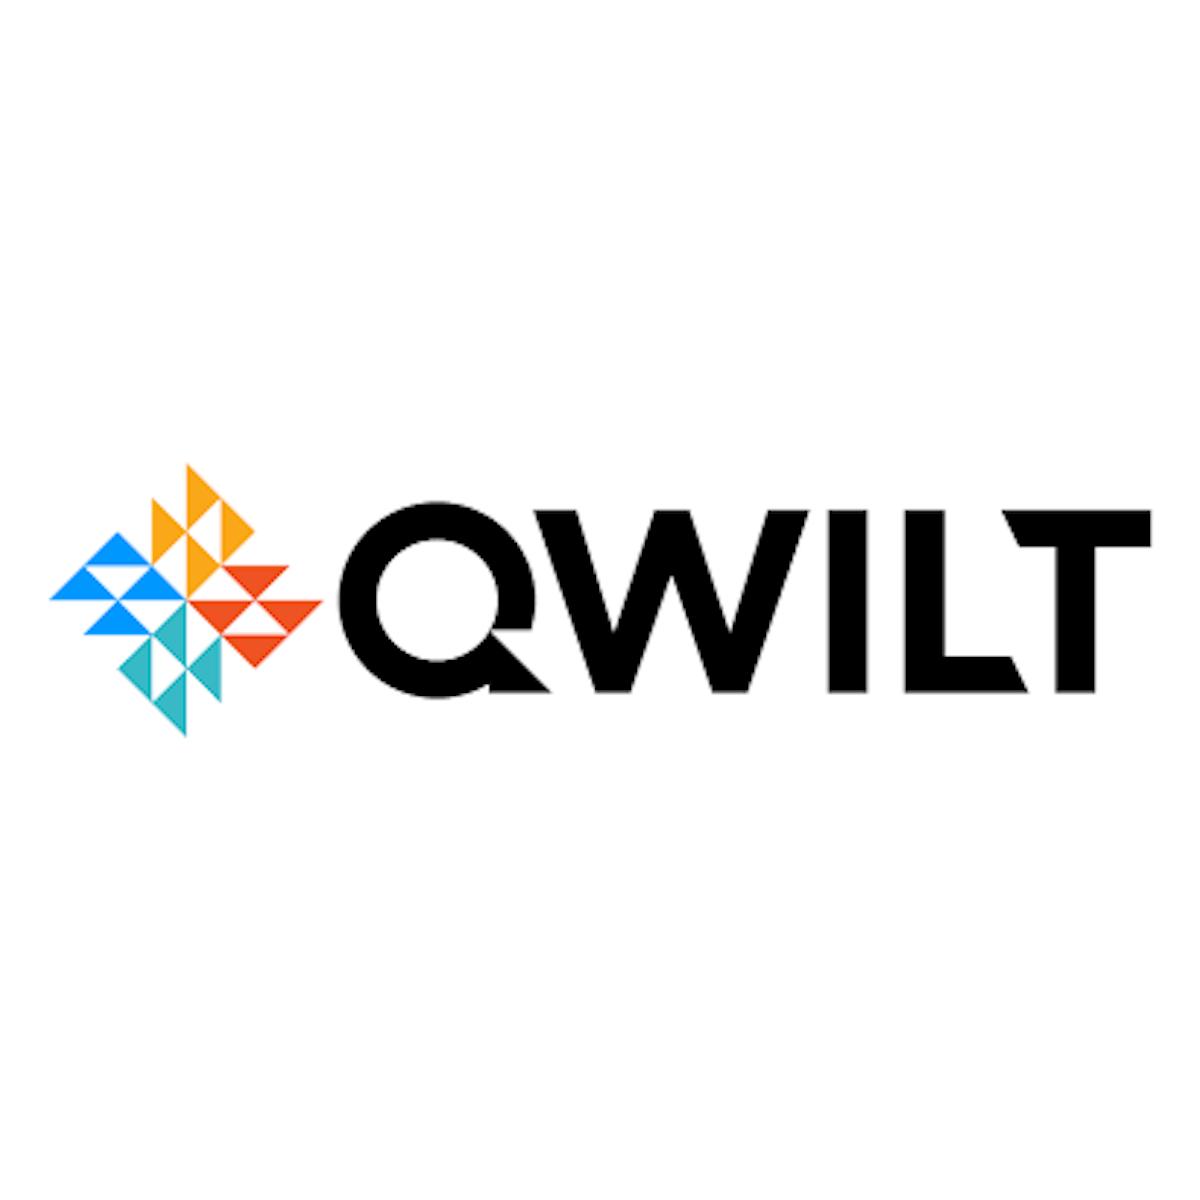 Qwilt Logo